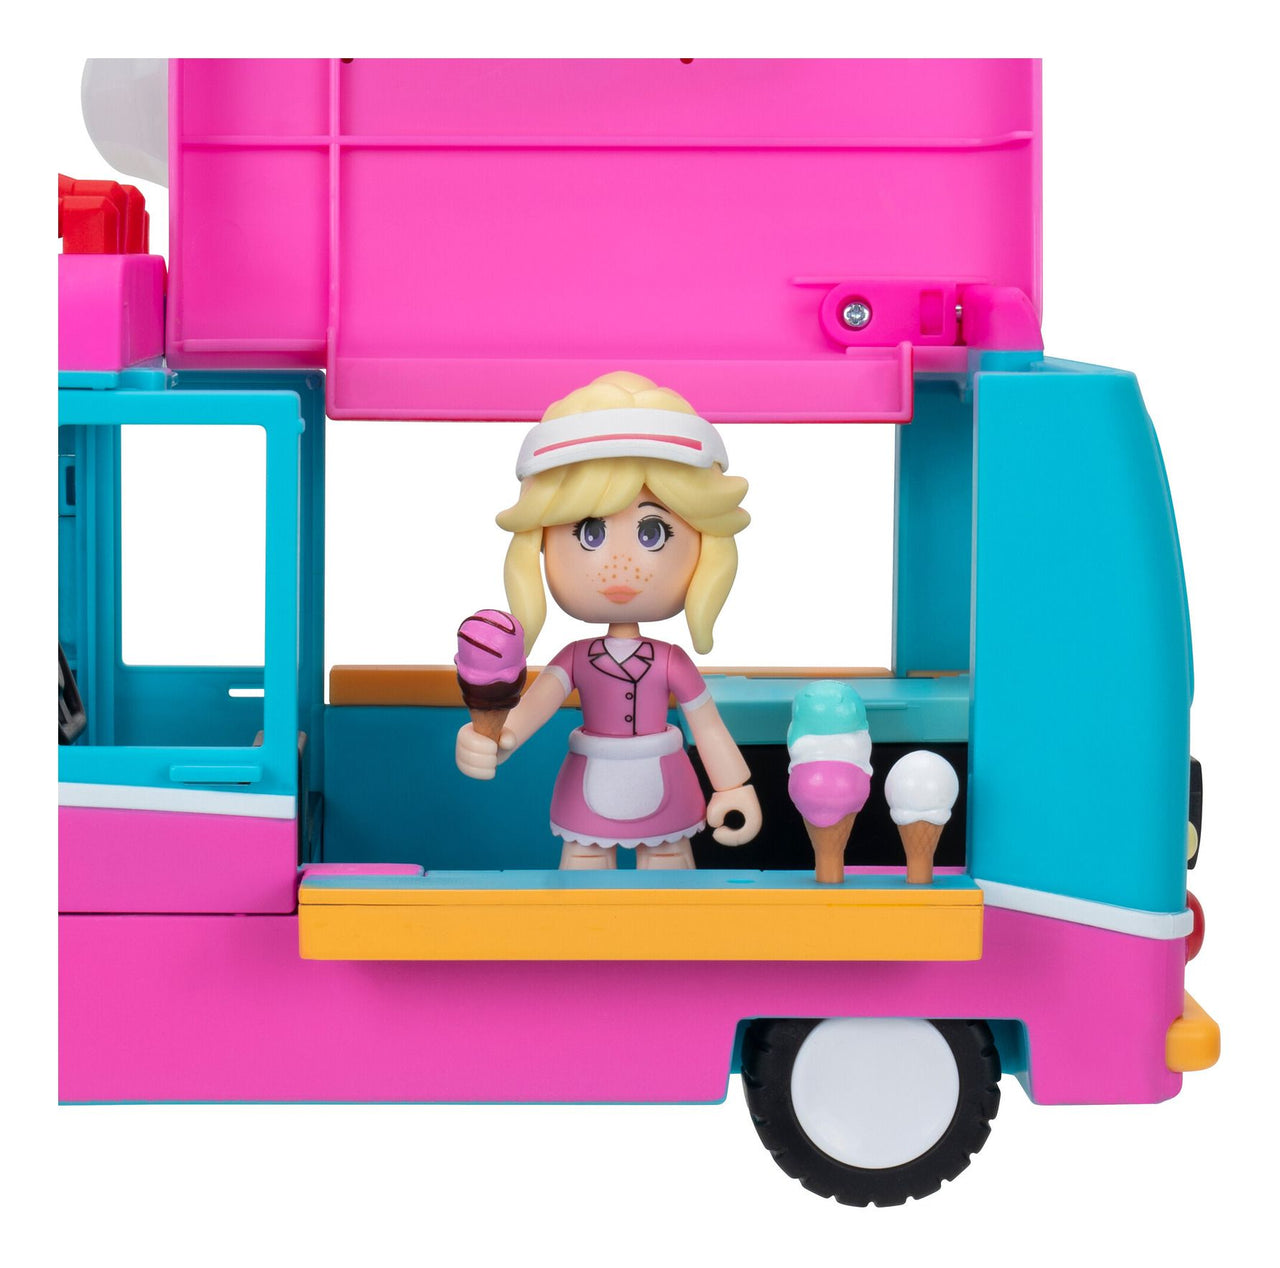 Adopt Me - Ice Cream Truck Feature Vehicle Adopt Me